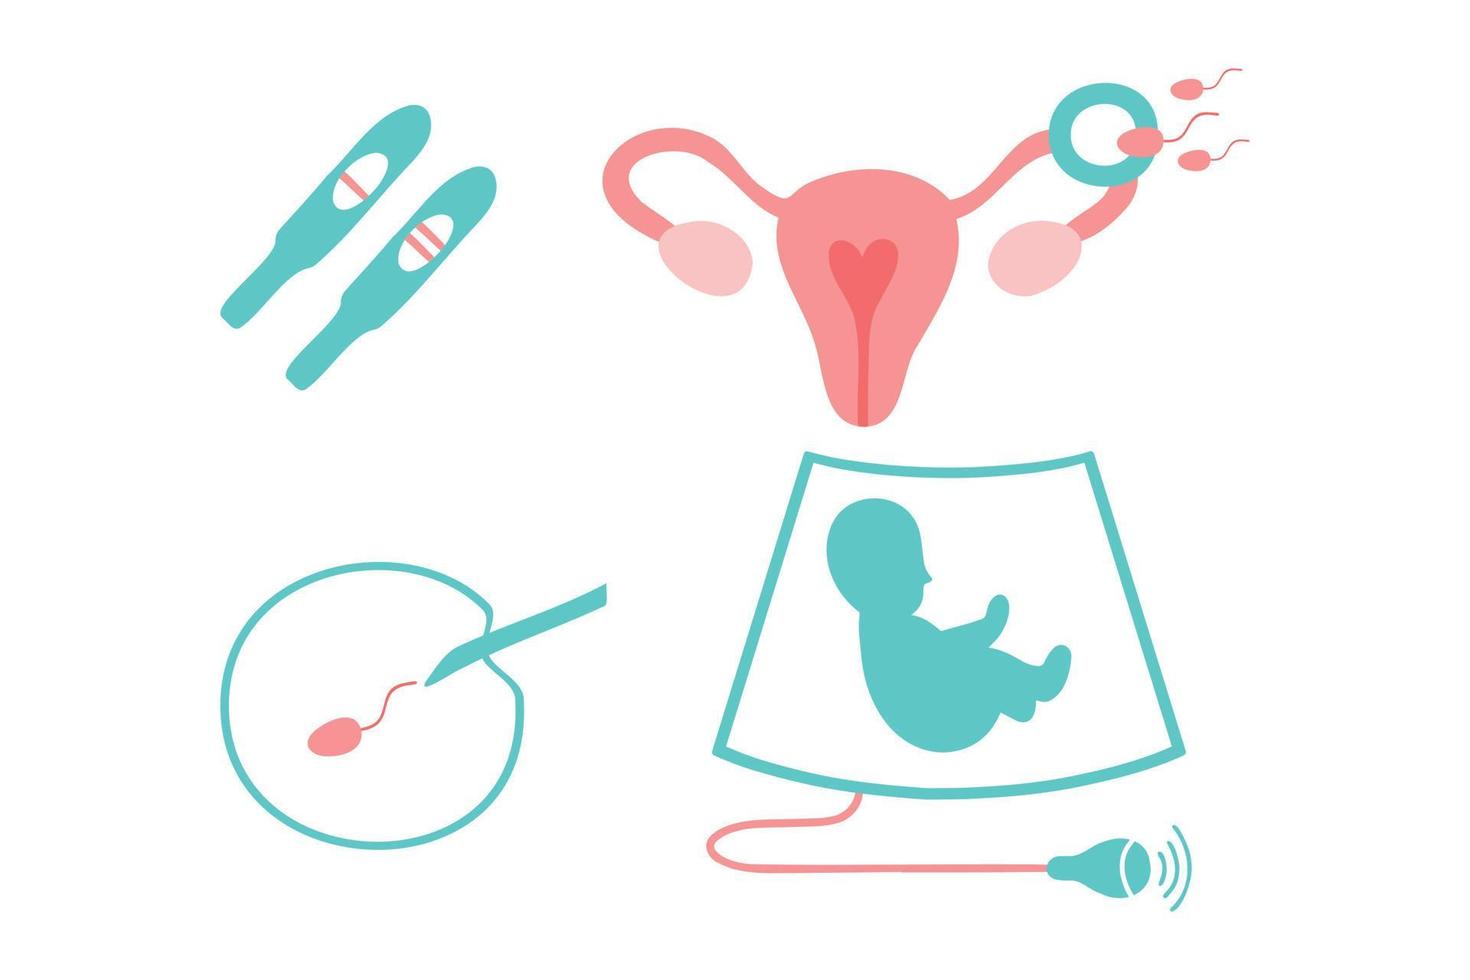 verloskunde pictogrammen instellen. echografie, kunstmatige bevruchting, zwangerschap, foetus, intra-uteriene inseminatie, zwangerschapstest. vector